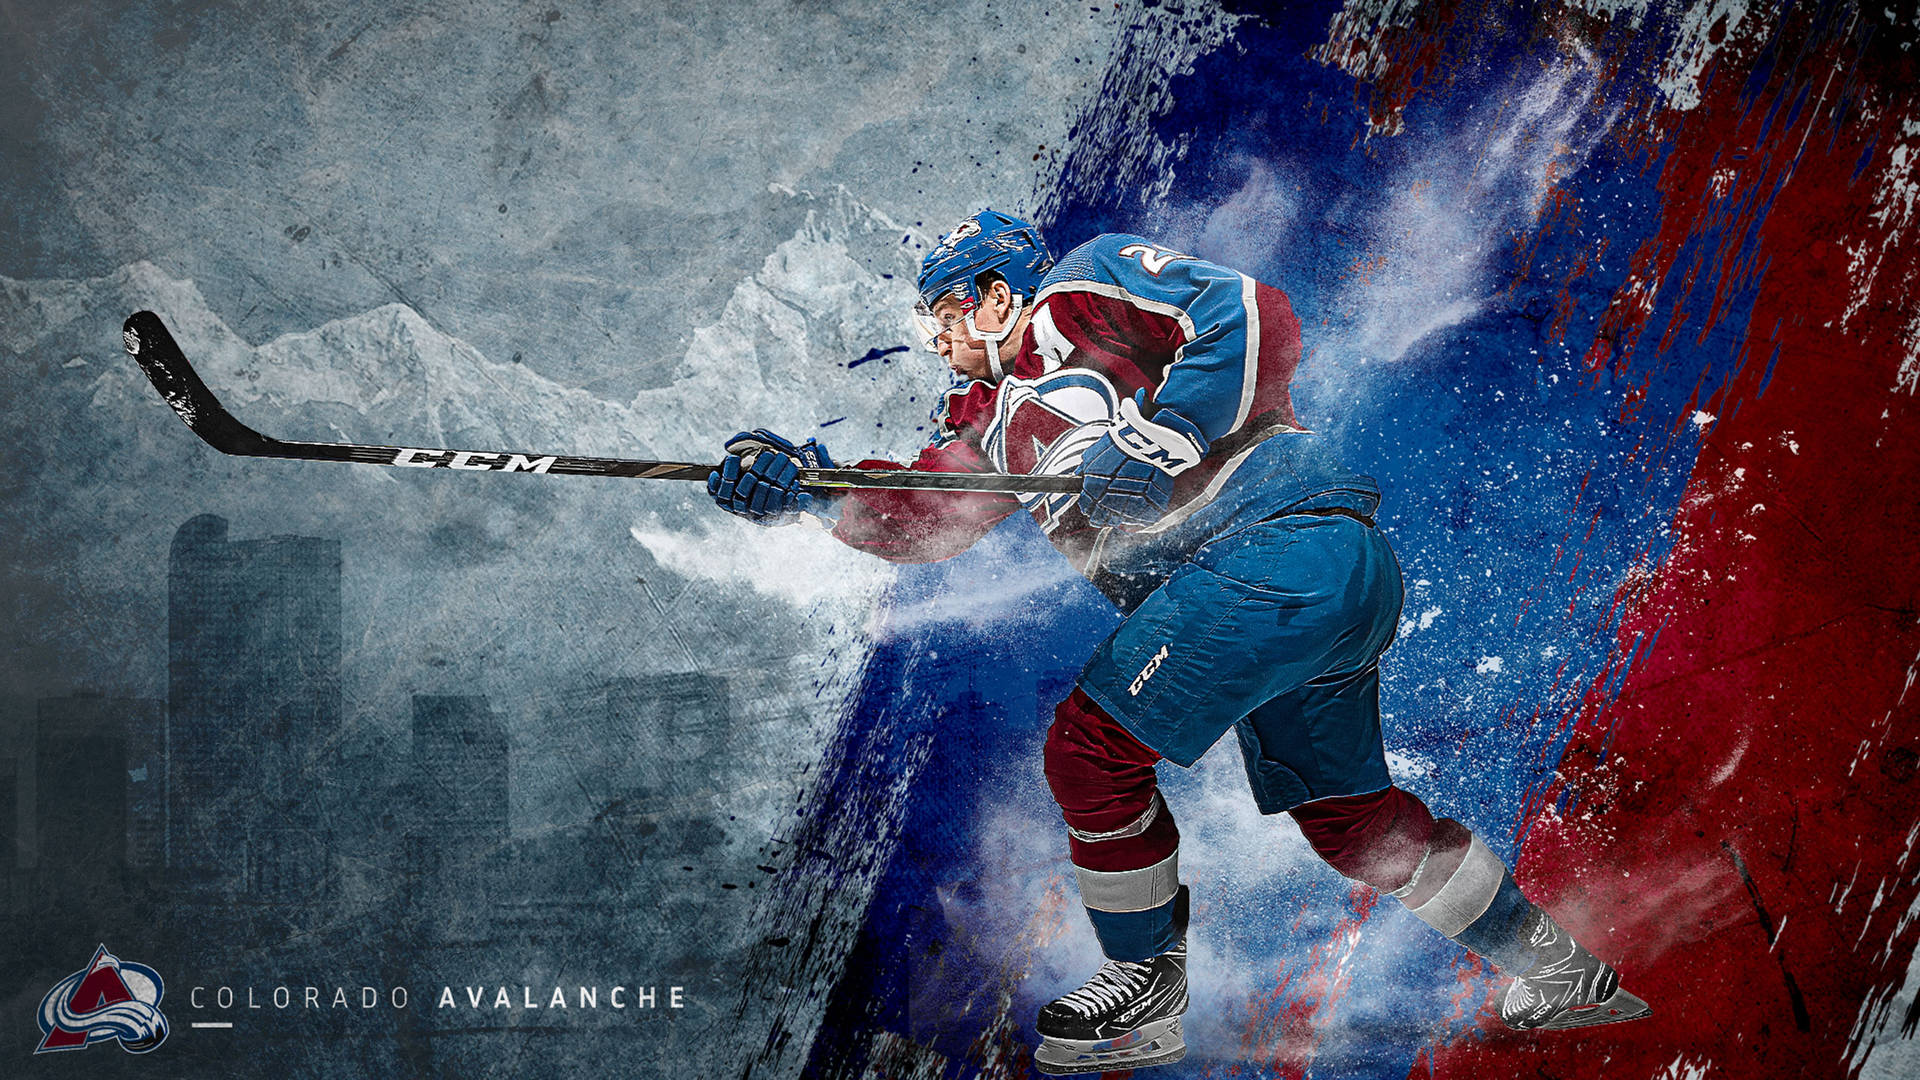 Colorado Avalanche Ice Hockey Team Graphic Design